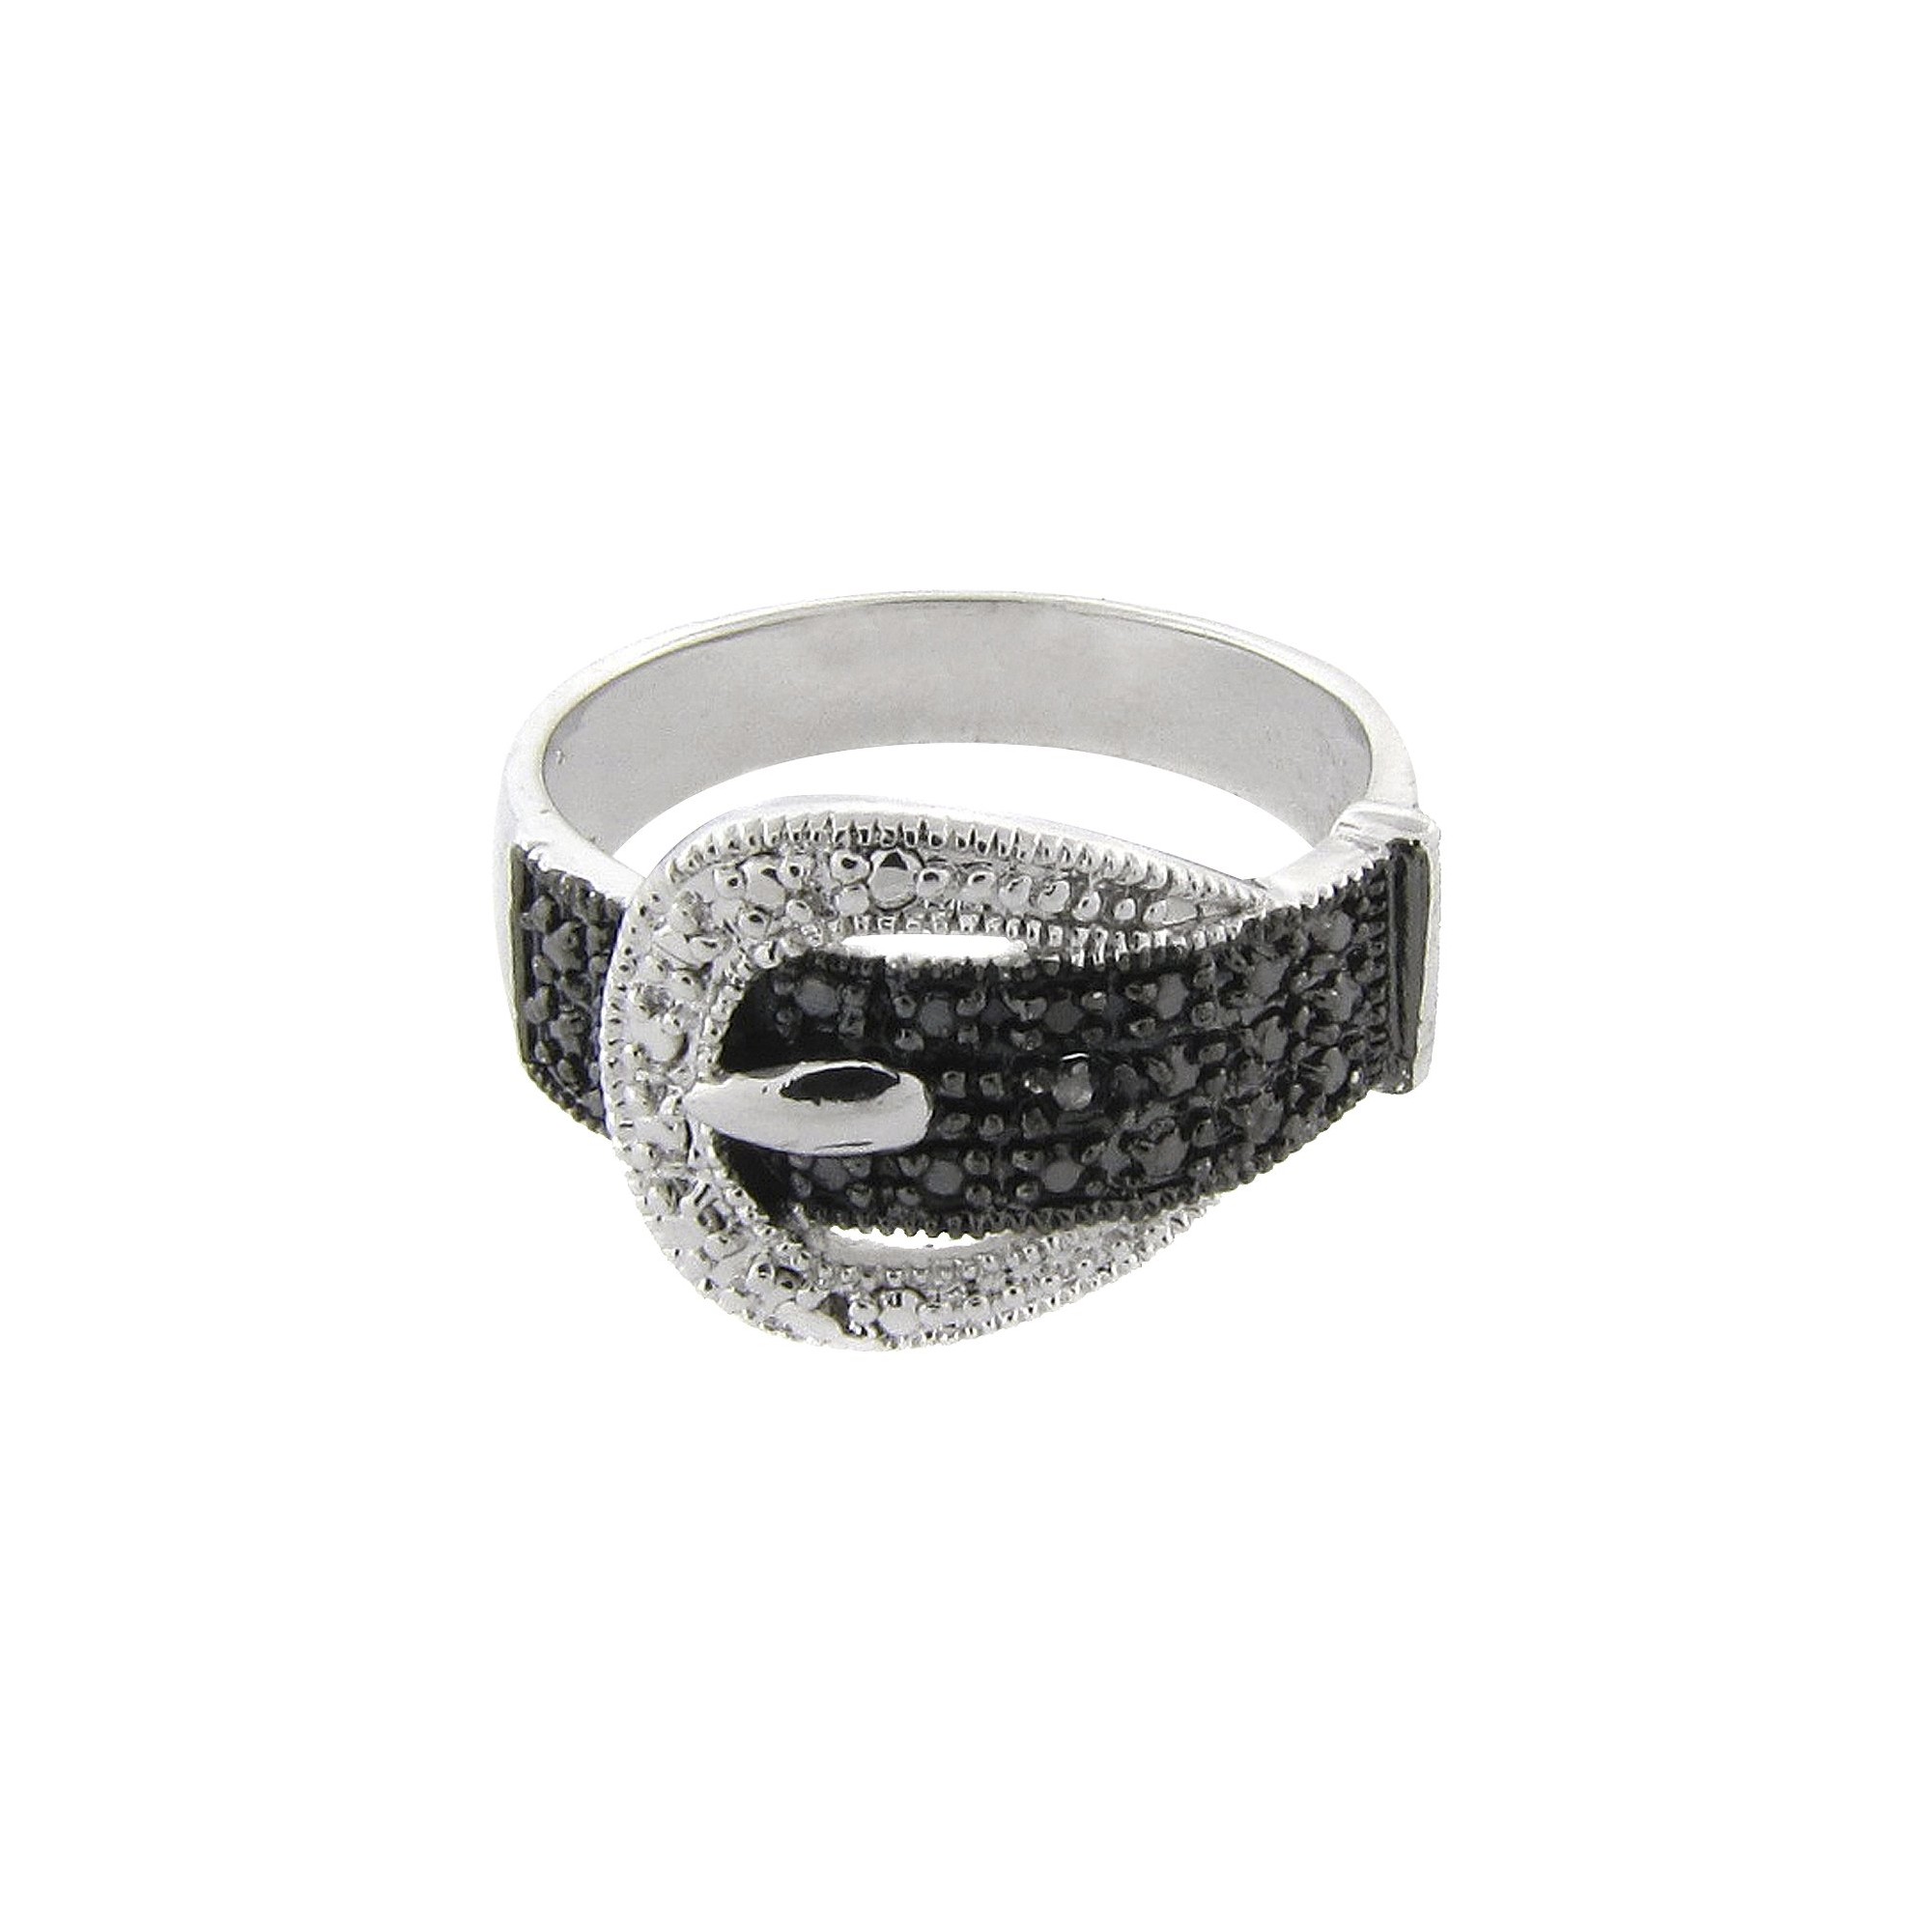 Black/White Diamond Buckle Ring - Size 8, Women's, Silver